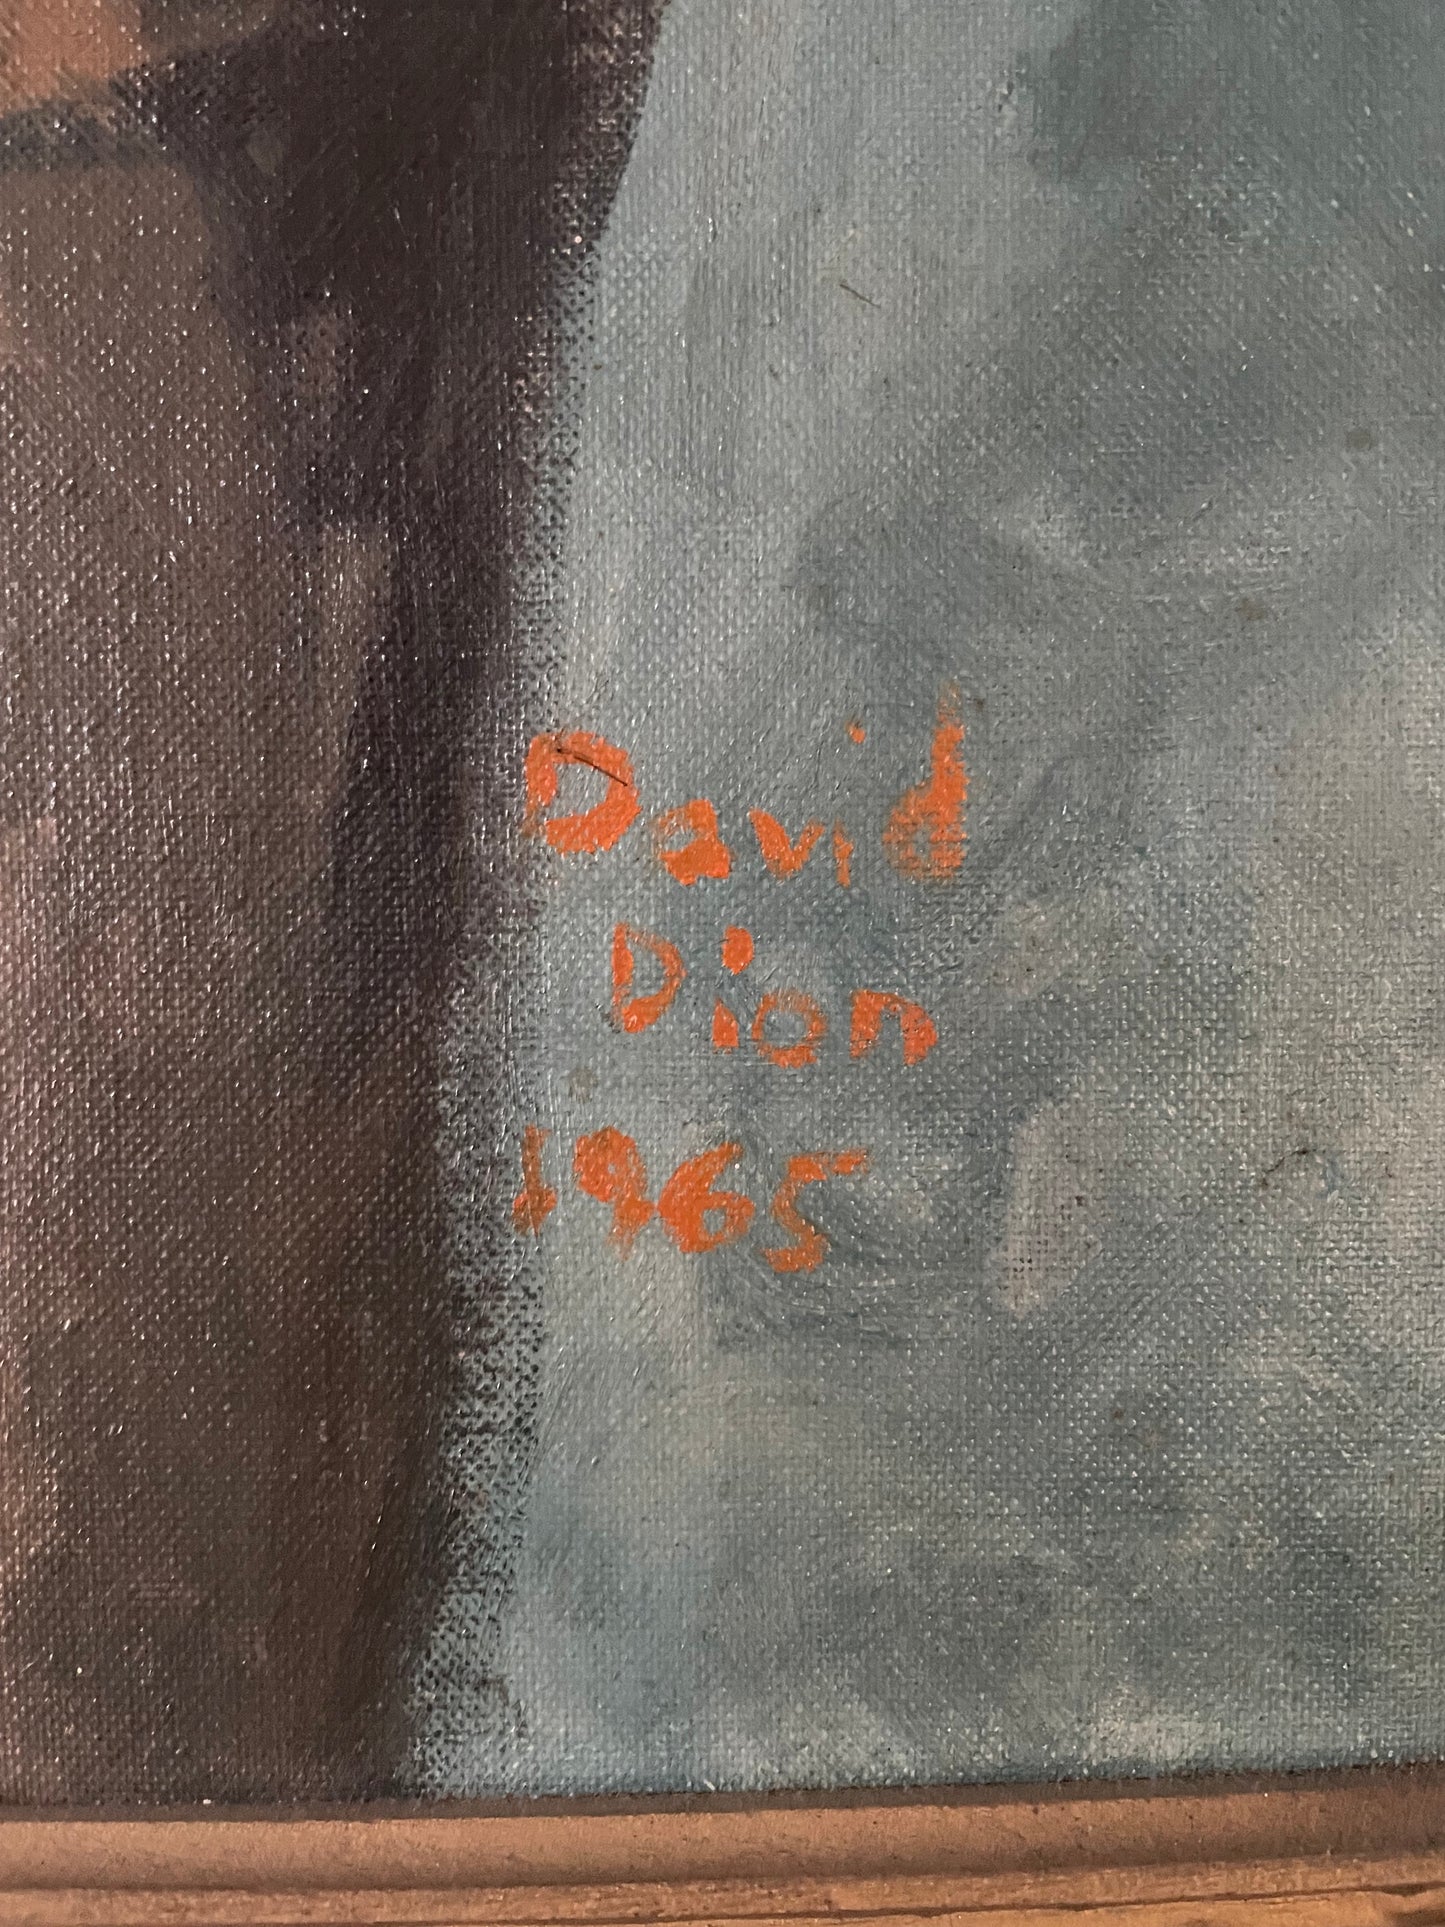 David Dion, Untitled, 1965